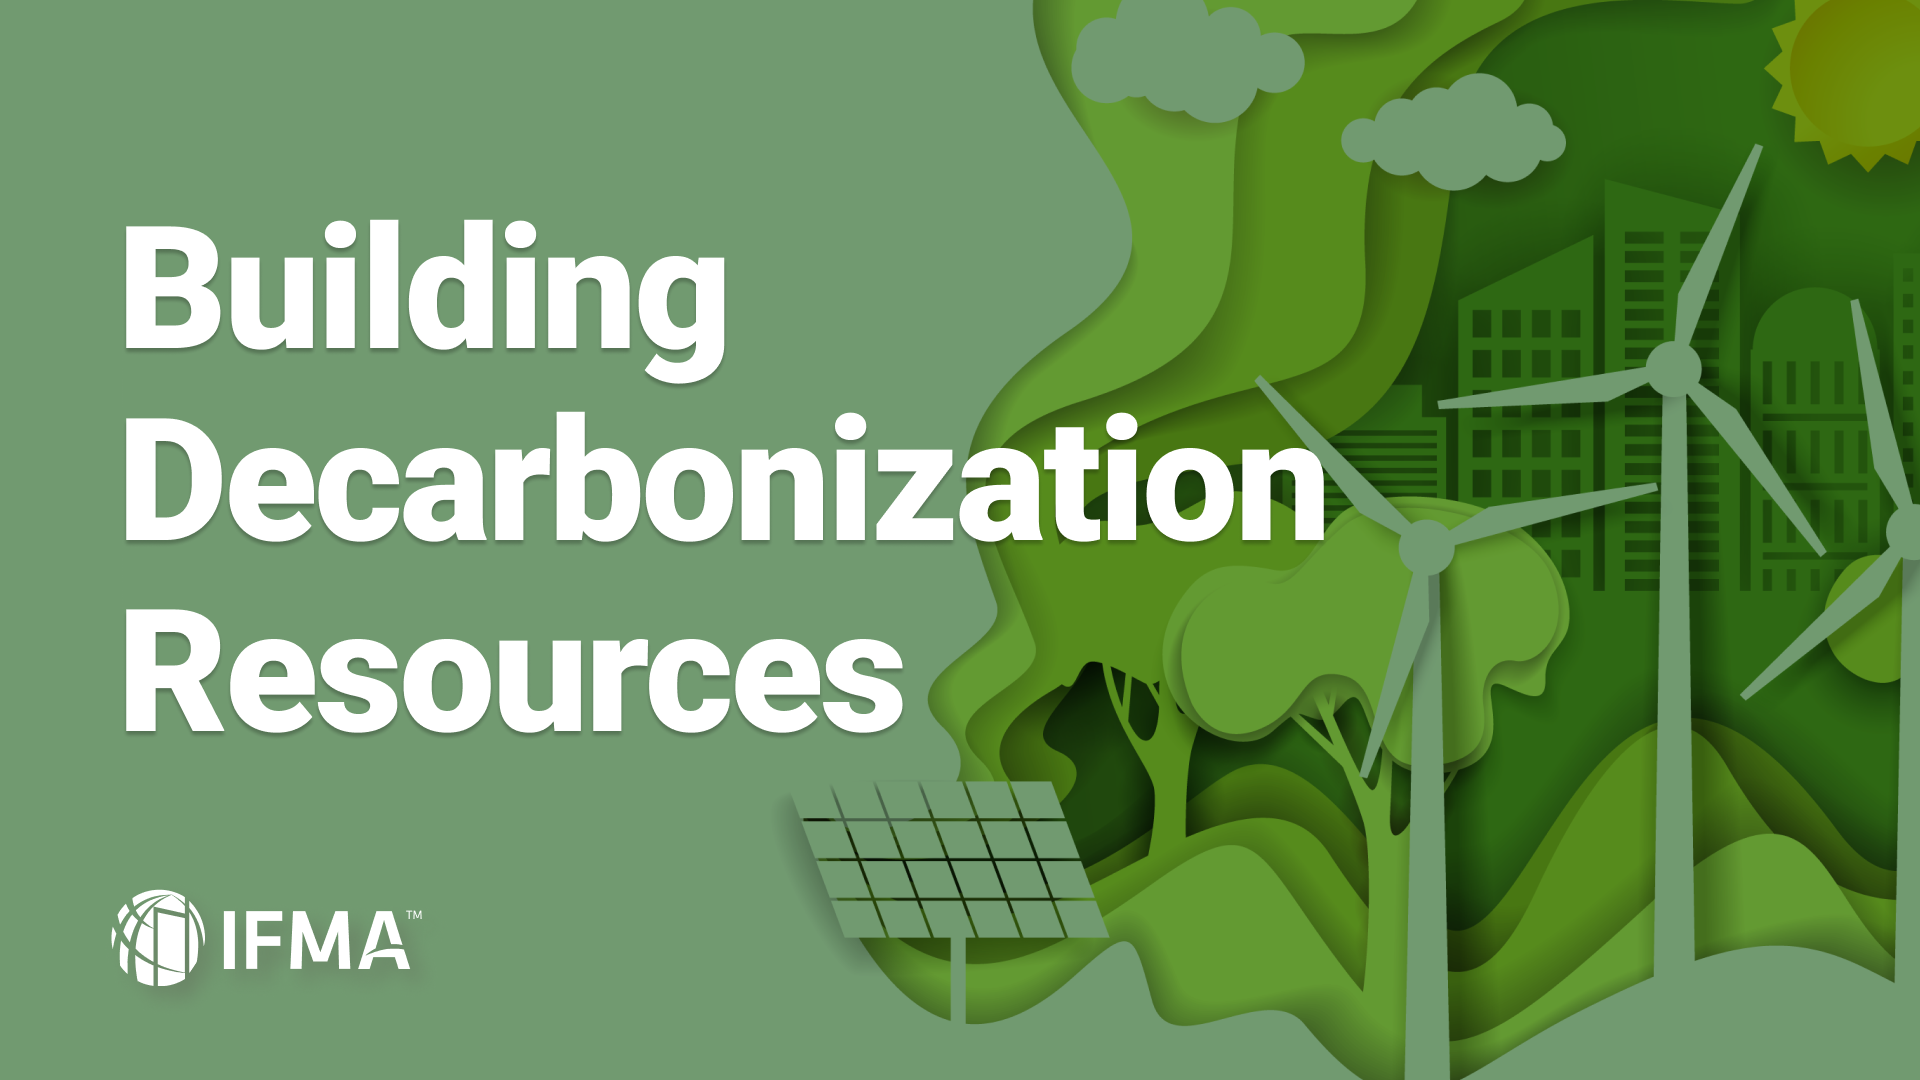 Schneider Electric identifies new decarbonization pathways for the